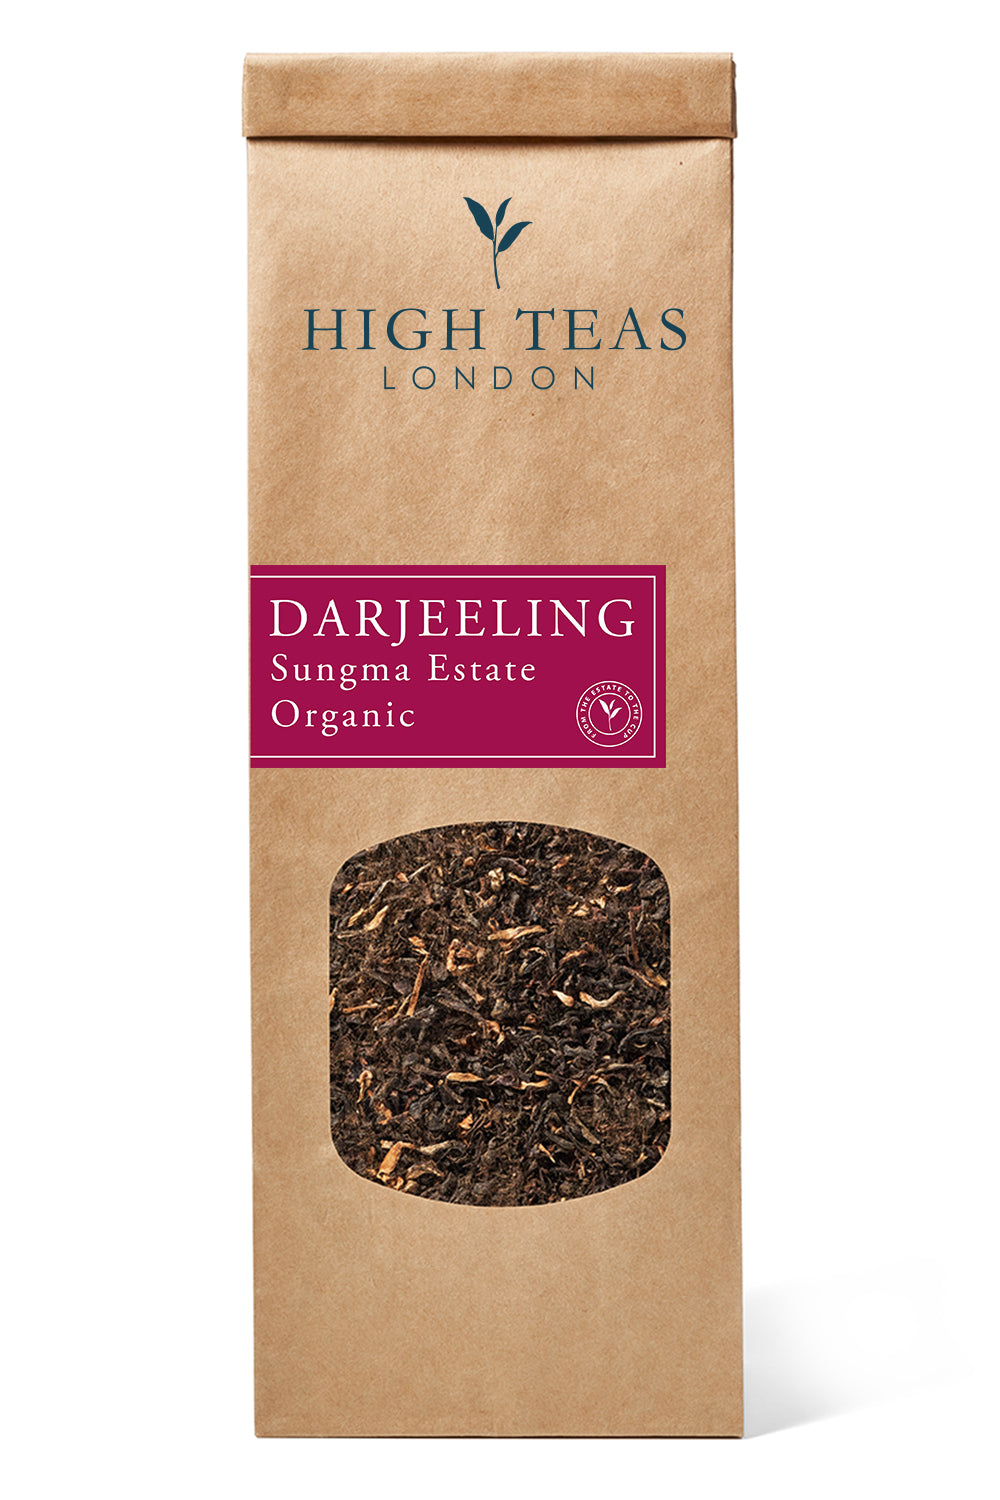 Darjeeling BPS Sungma Estate Organic-50g-Loose Leaf Tea-High Teas